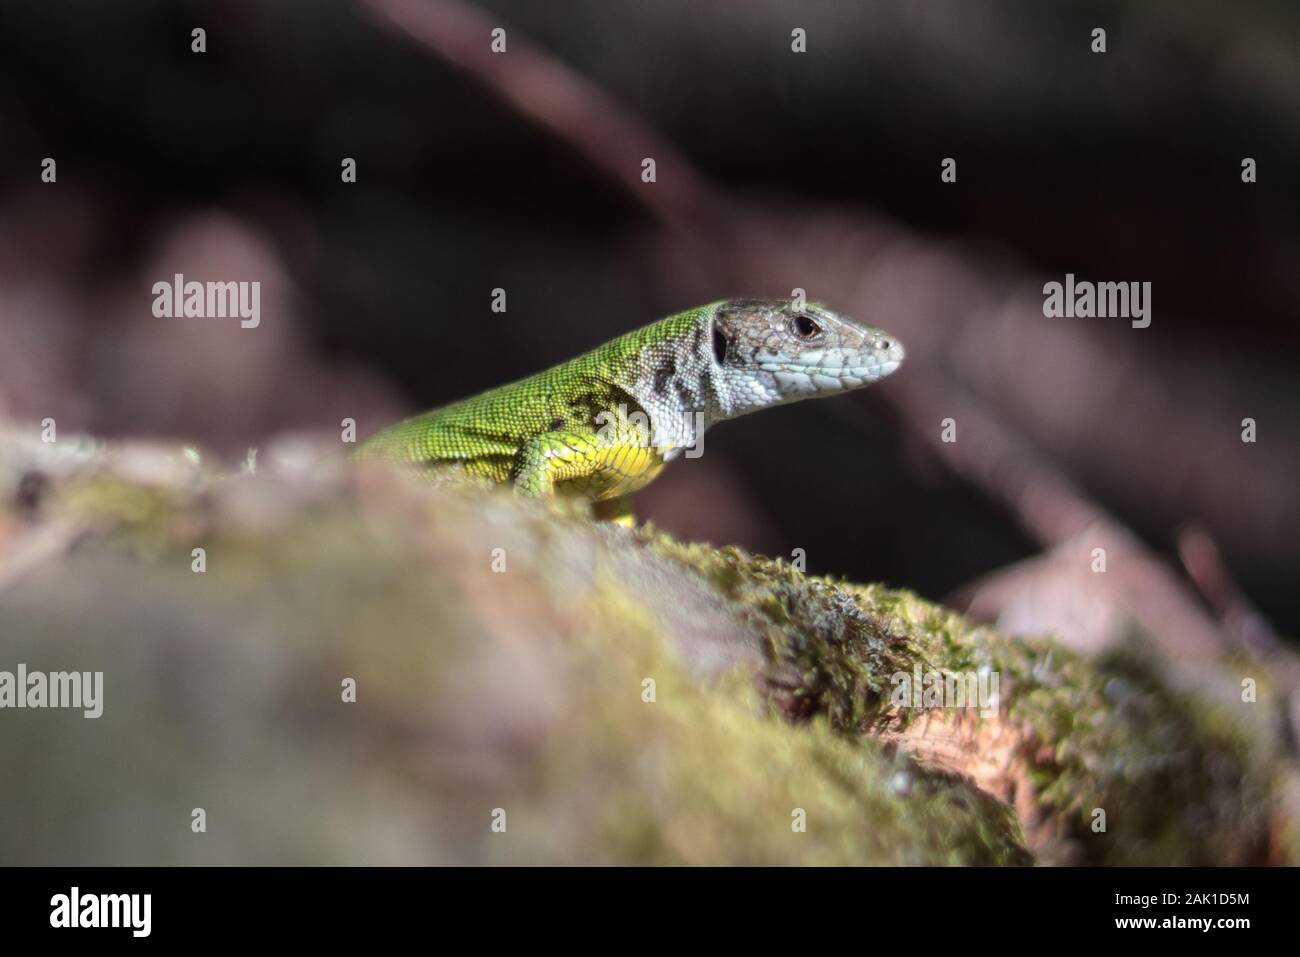 Small green lizard in grass on moss, sunlight, dark background Stock Photo